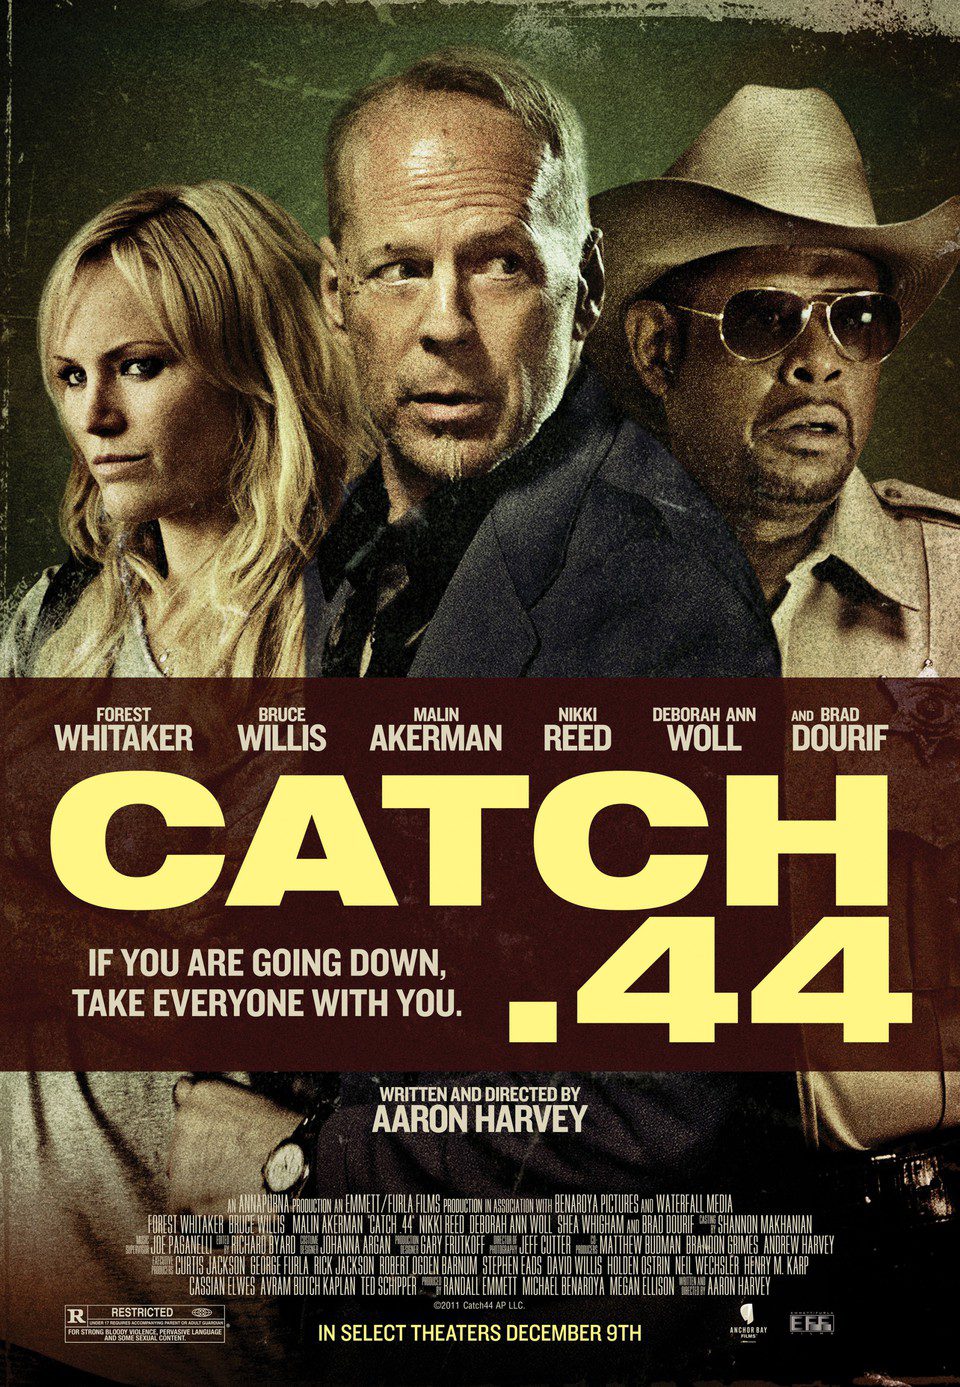 Cartel de Catch .44 - Estados Unidos